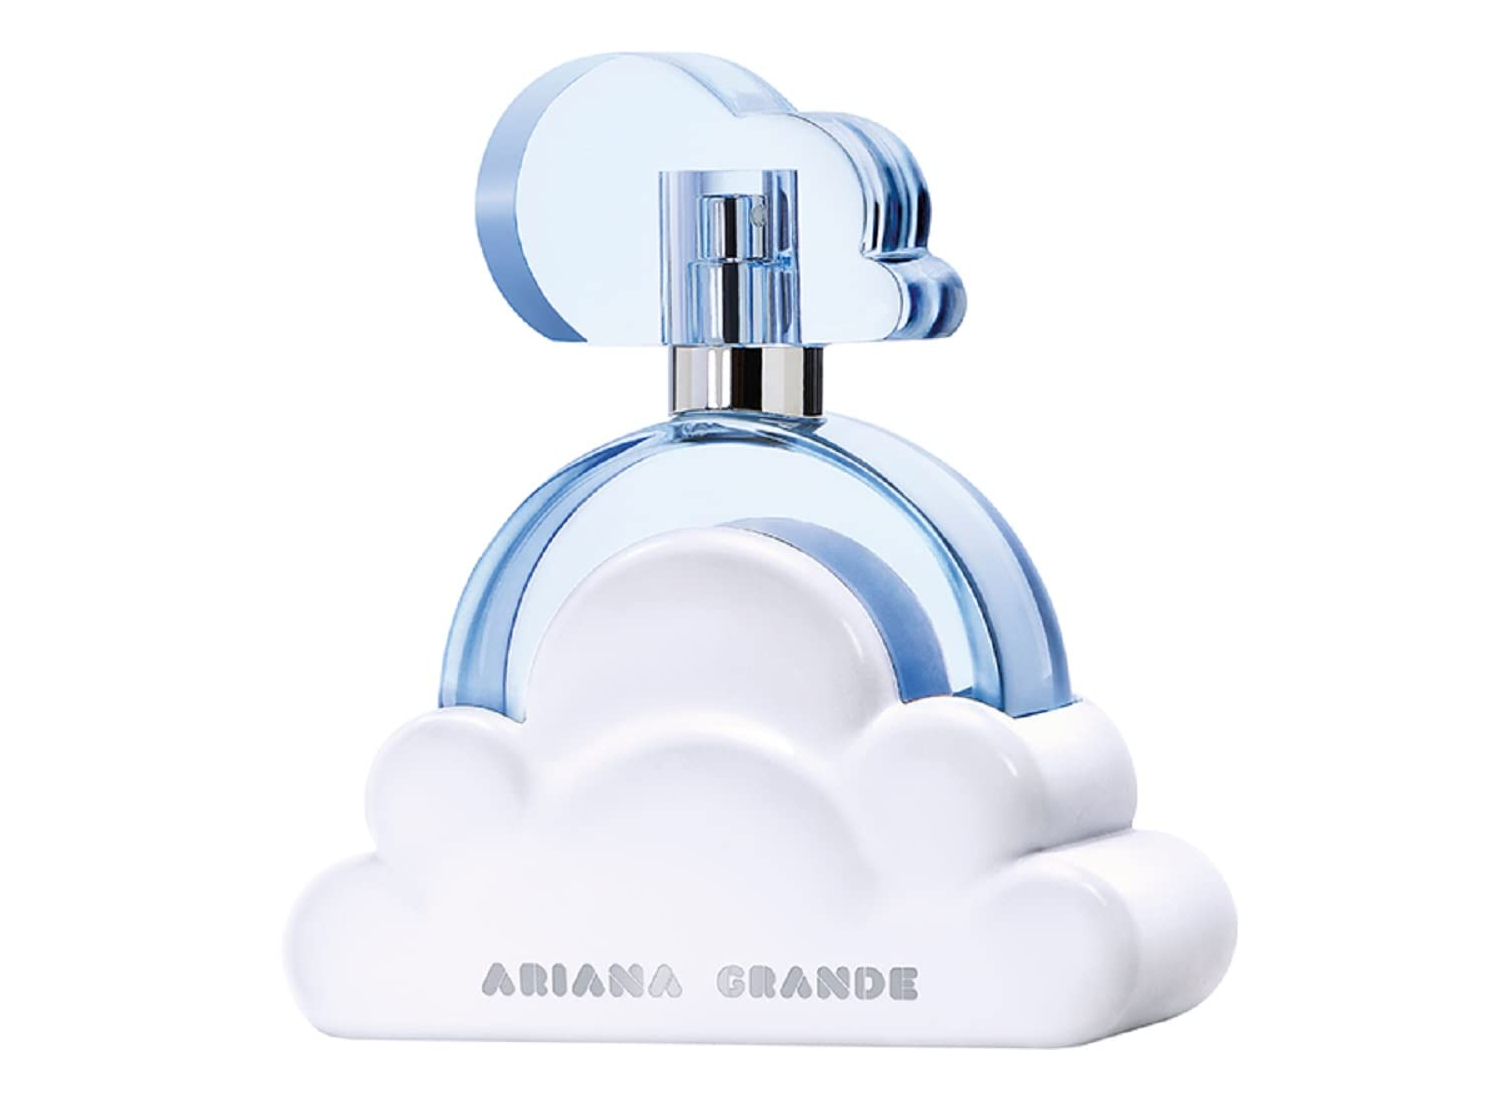 A bottle of Ariana Grande's Cloud perfume.